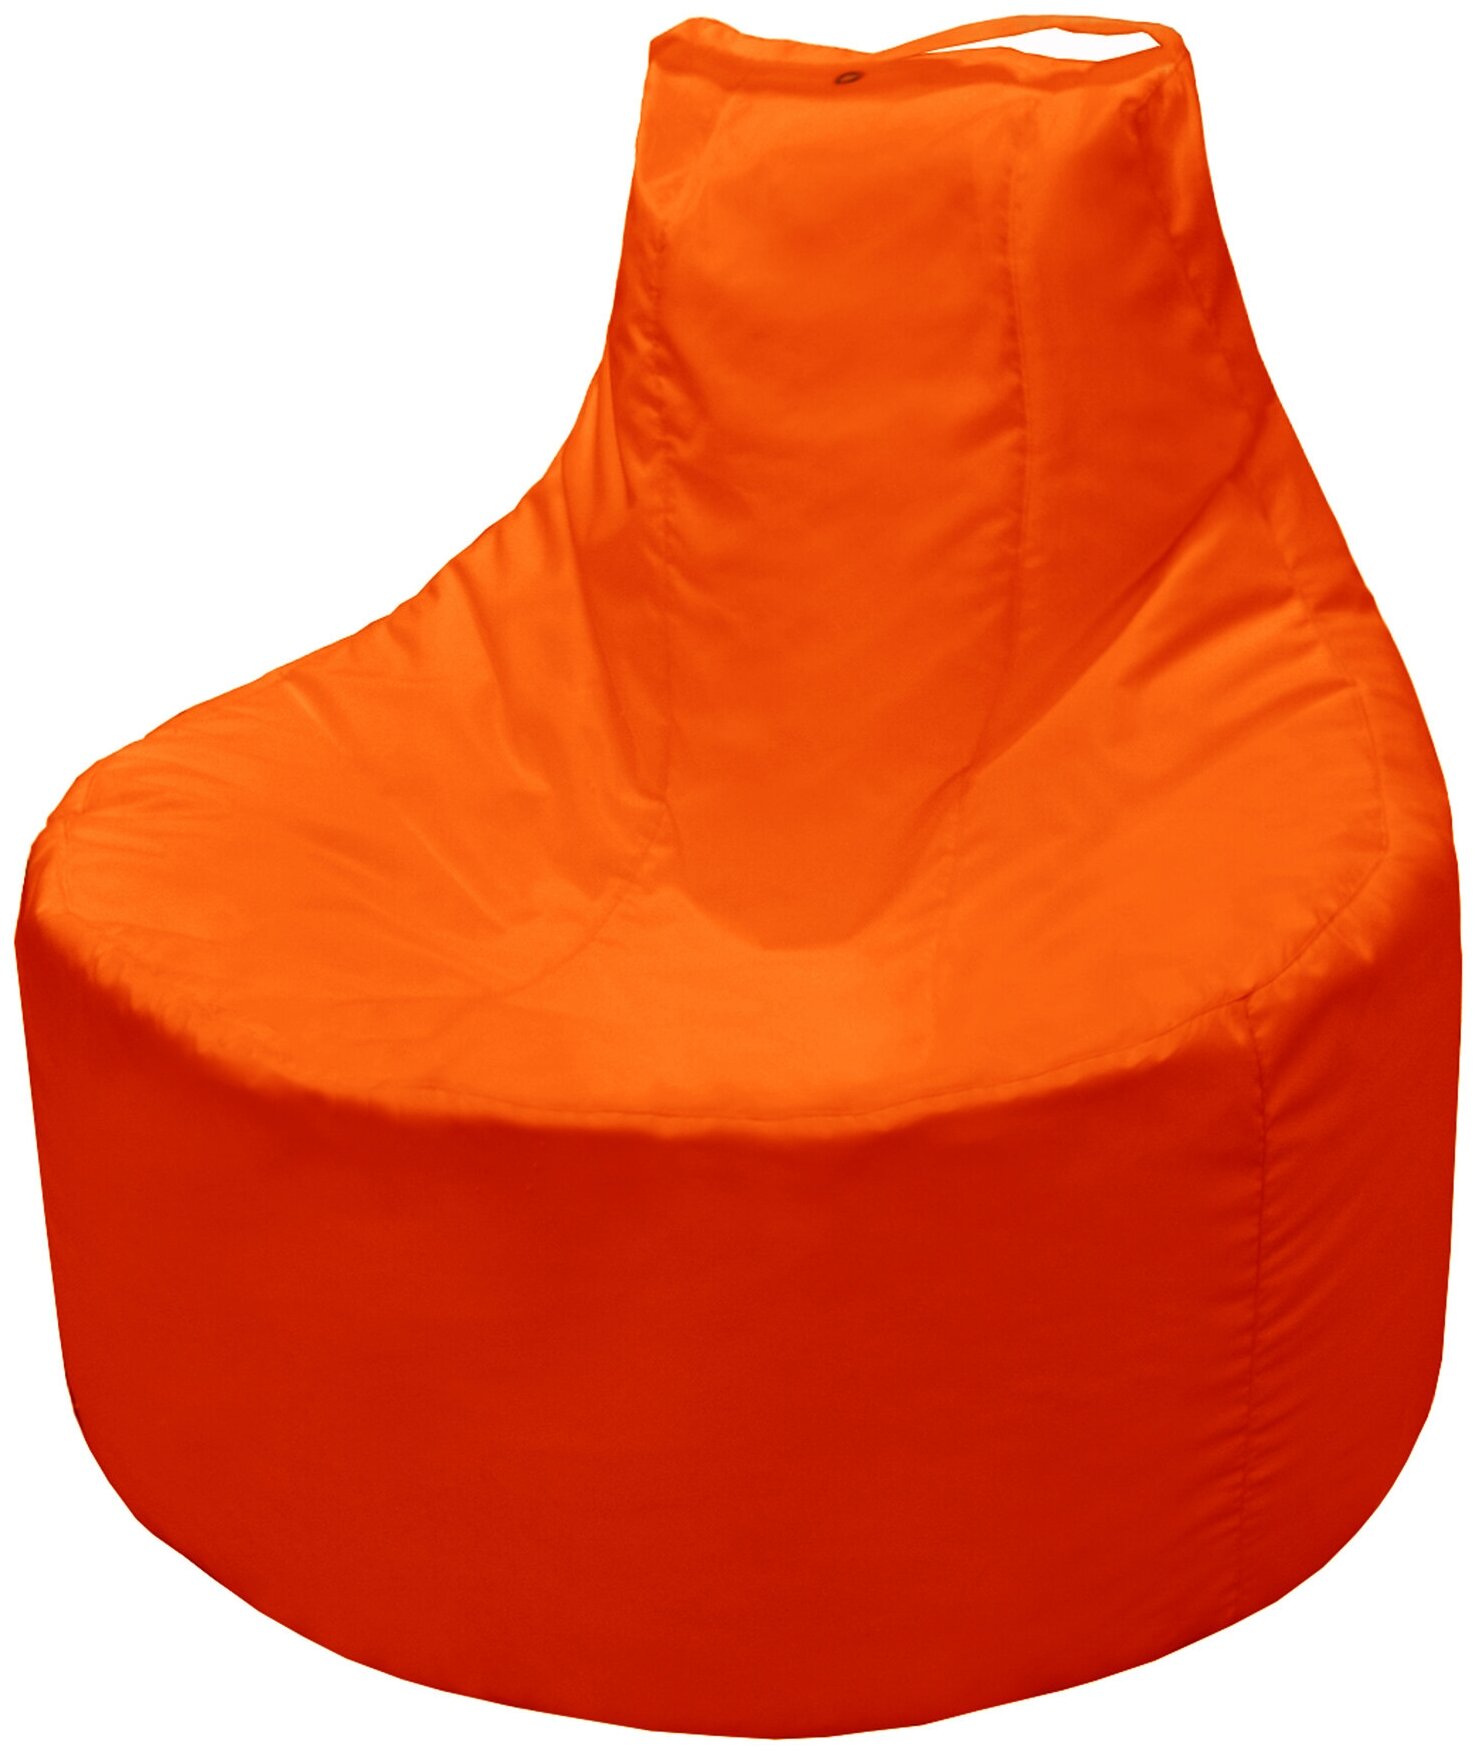 Кресло-мешок Банан Пазитифчик оранжевый (оксфорд) 100х85 см